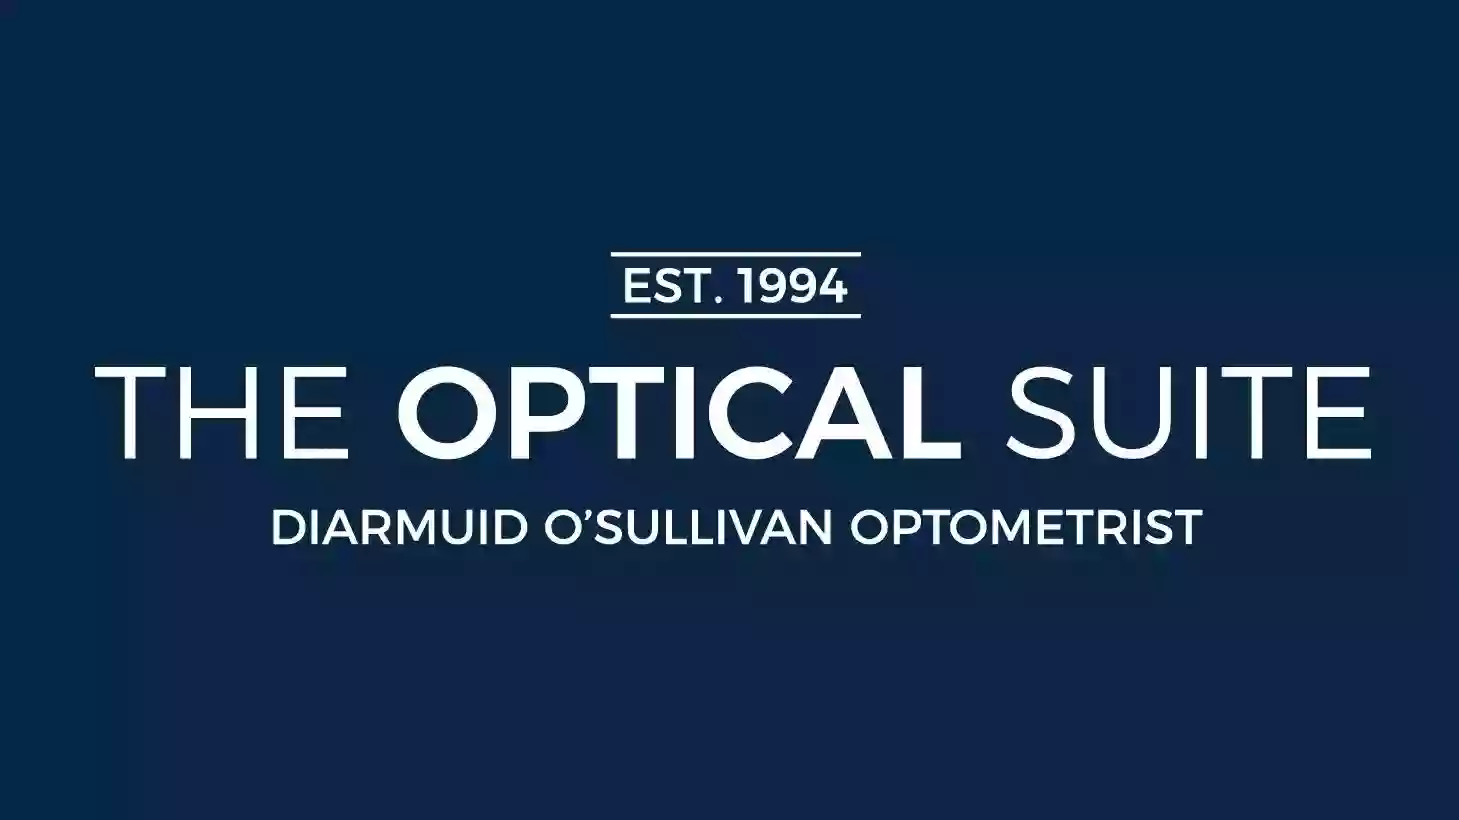 The Optical Suite, Diarmuid O’Sullivan Optometrist